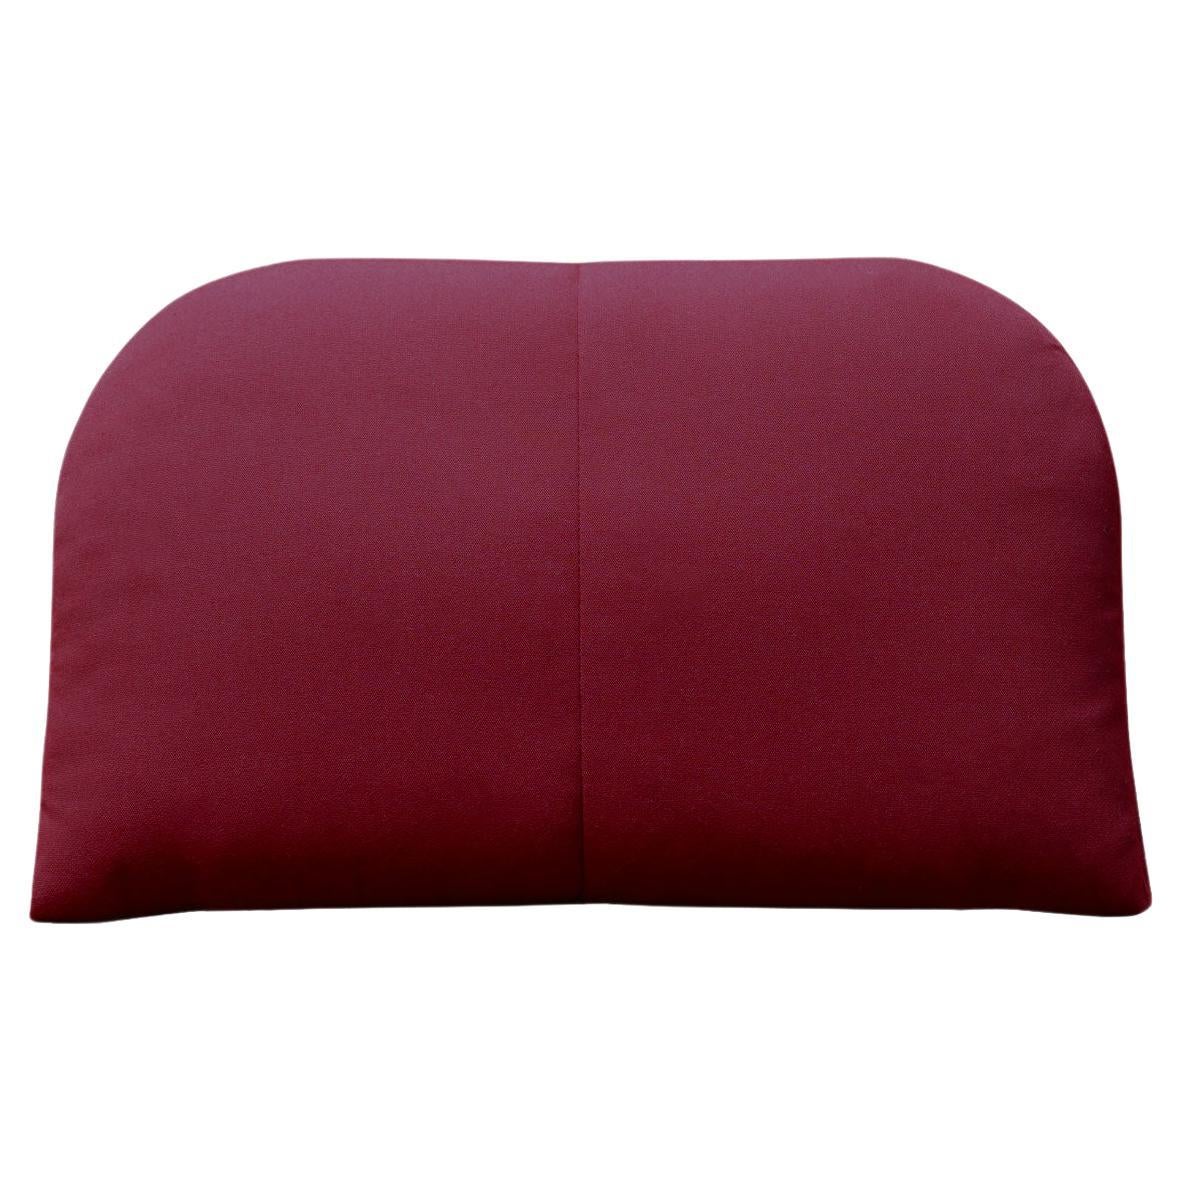 Bend Goods - Arc Throw Pillow in Burgundy Sunbrella For Sale